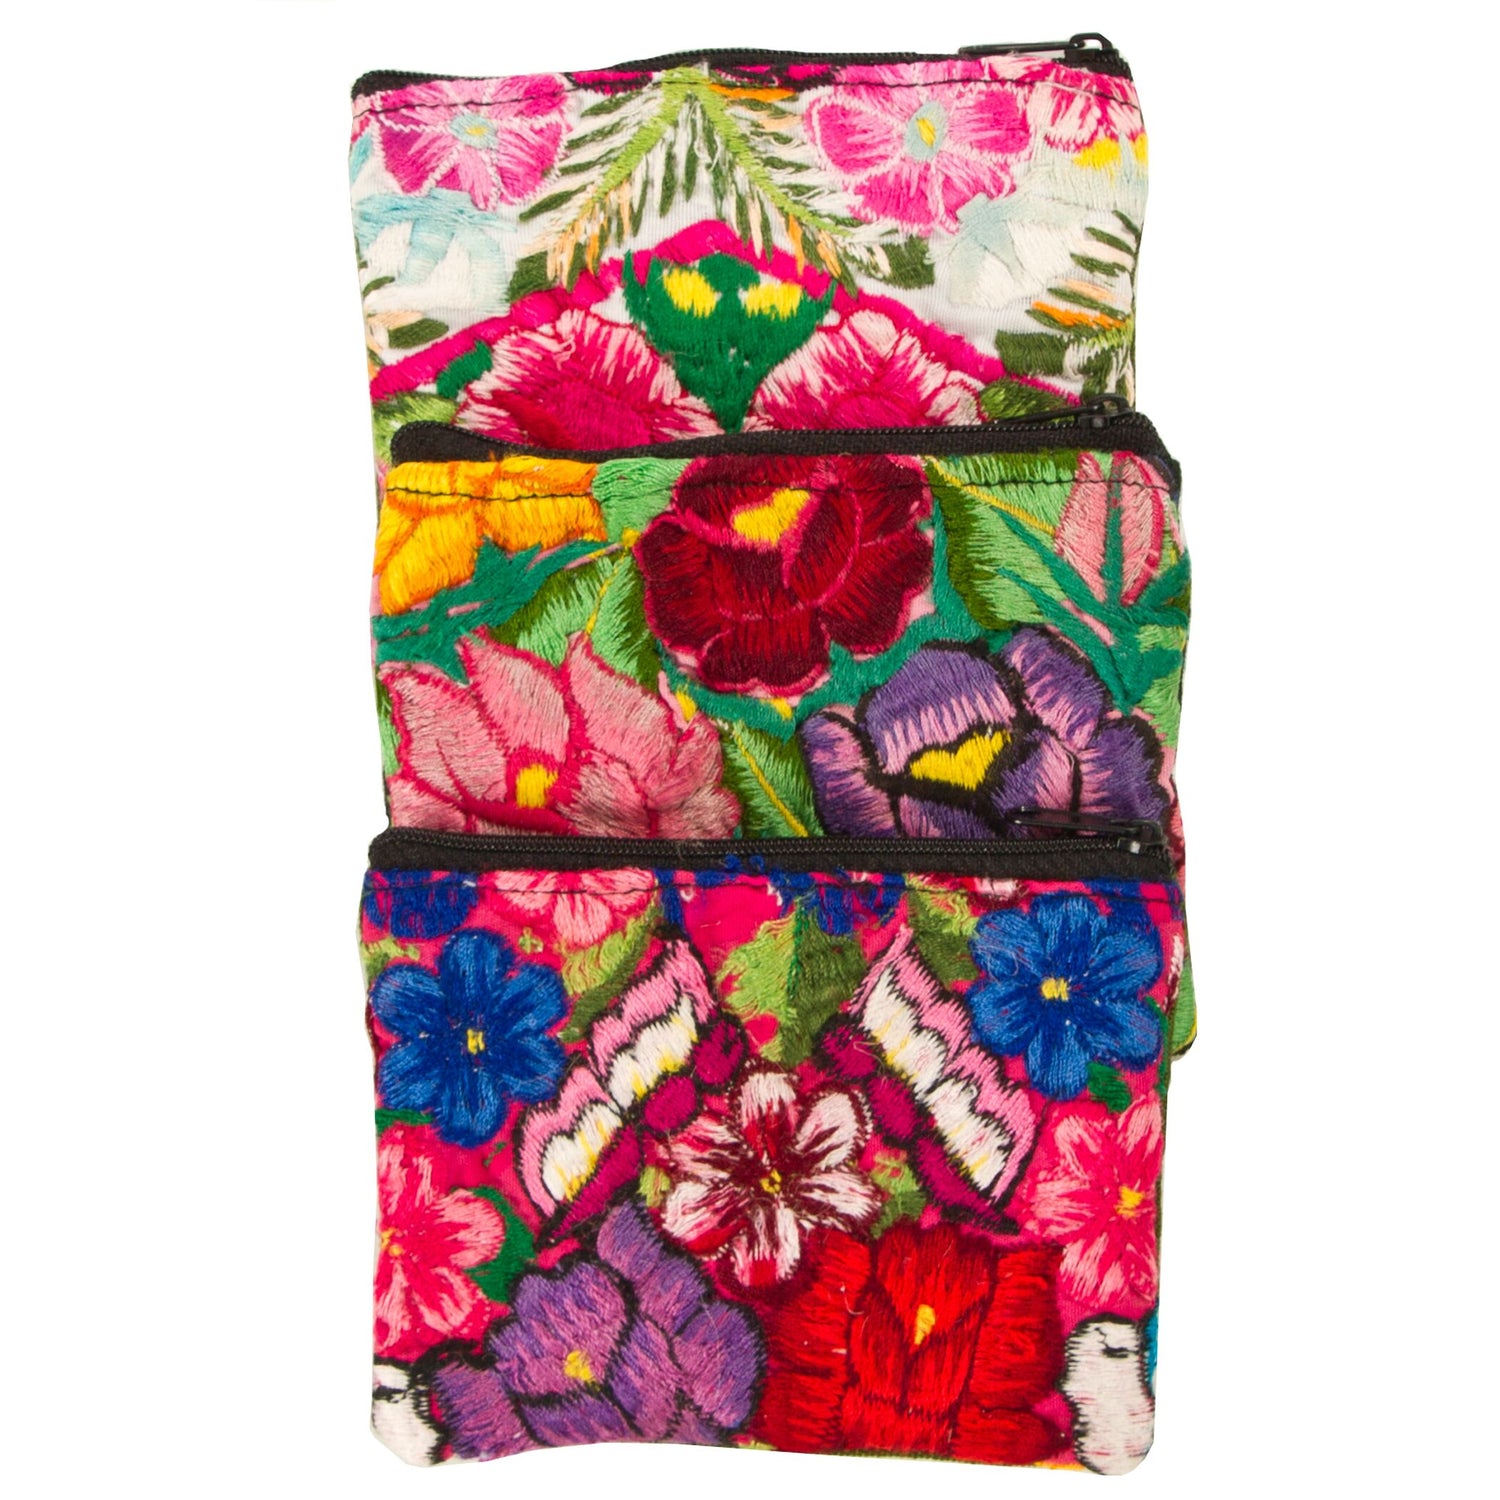 Lucia's World Emporium Fair Trade Handmade Guatemalan Embroidered Flower Coin Bag